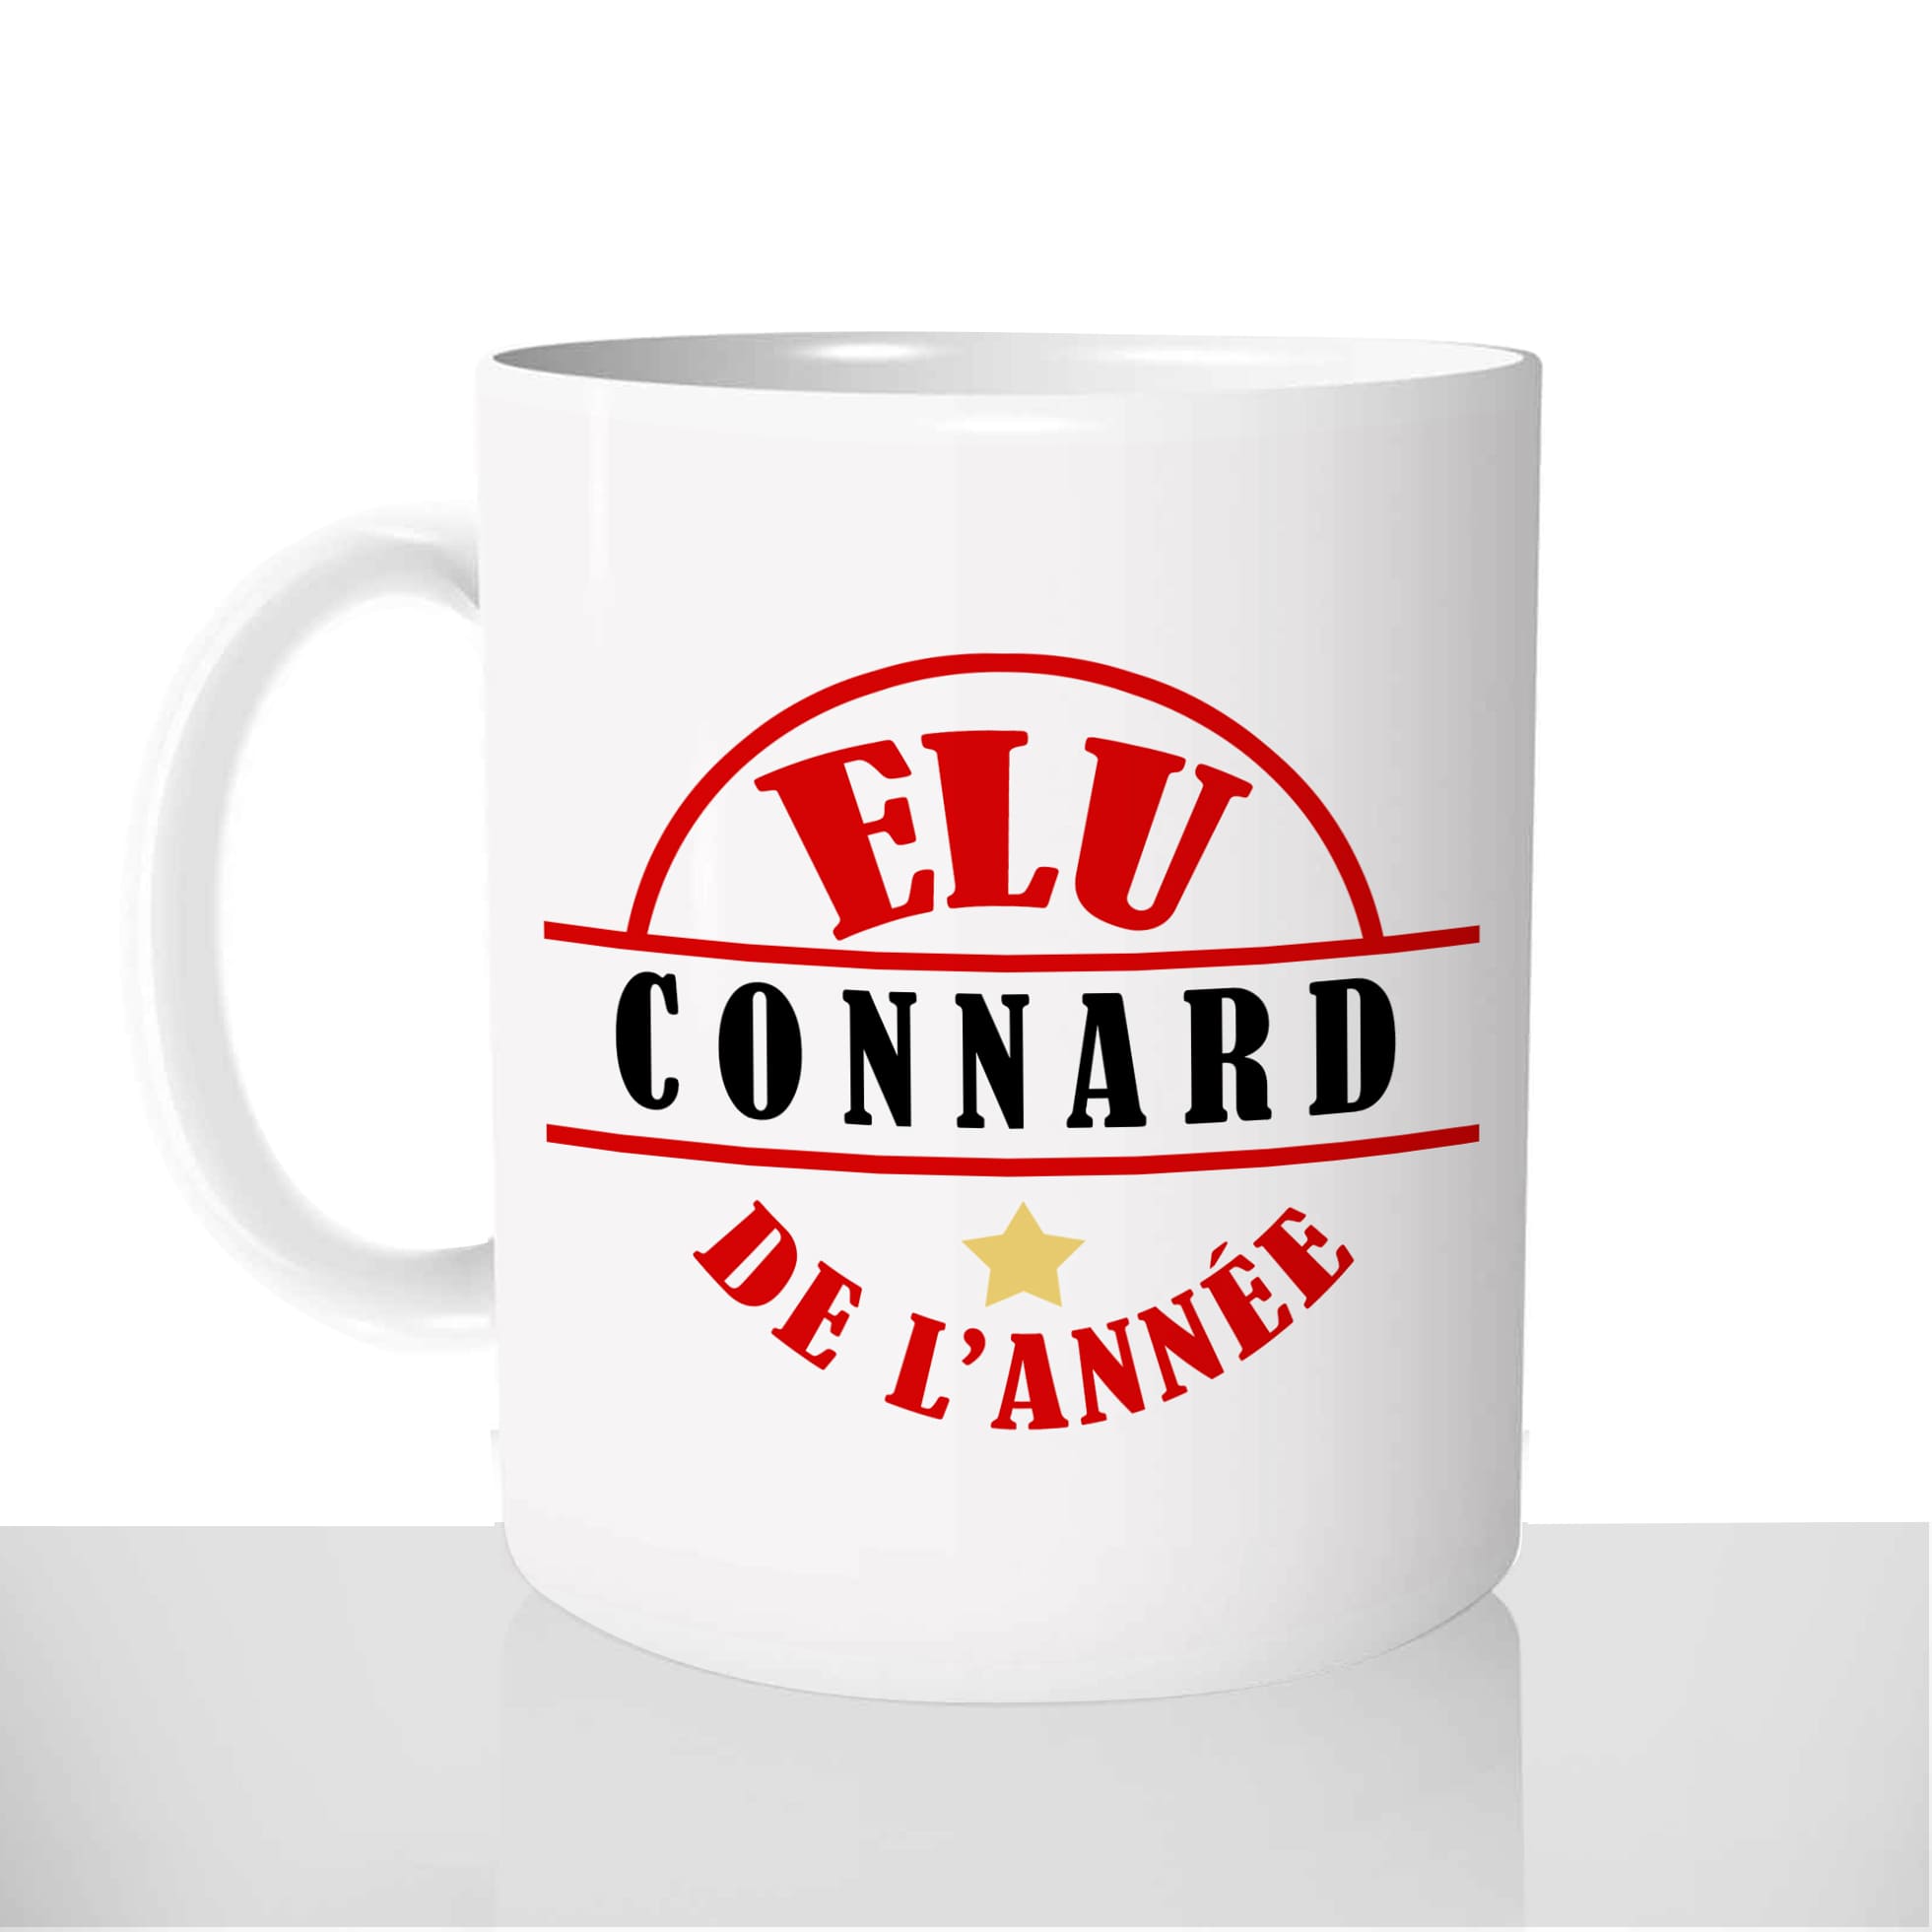 mug-blanc-brillant-personnalisé-tasse-elu-connard-de-lannée-homme-con-collegue-ami-drole-fun-idée-cadeau-original-café